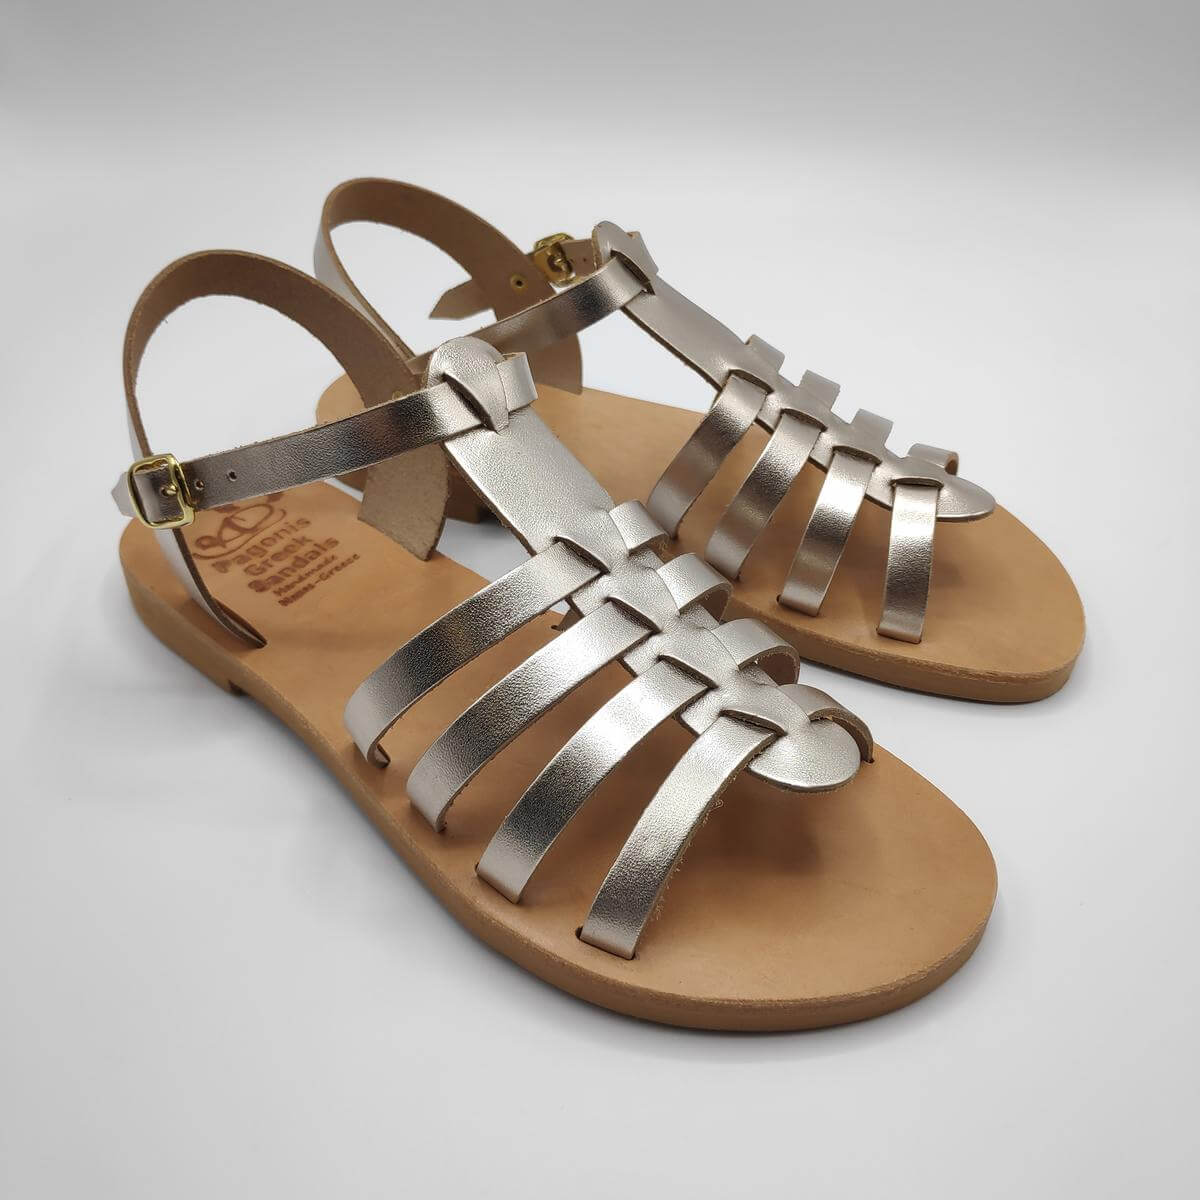 Strappy Gladiator Sandals Flats metallic gold